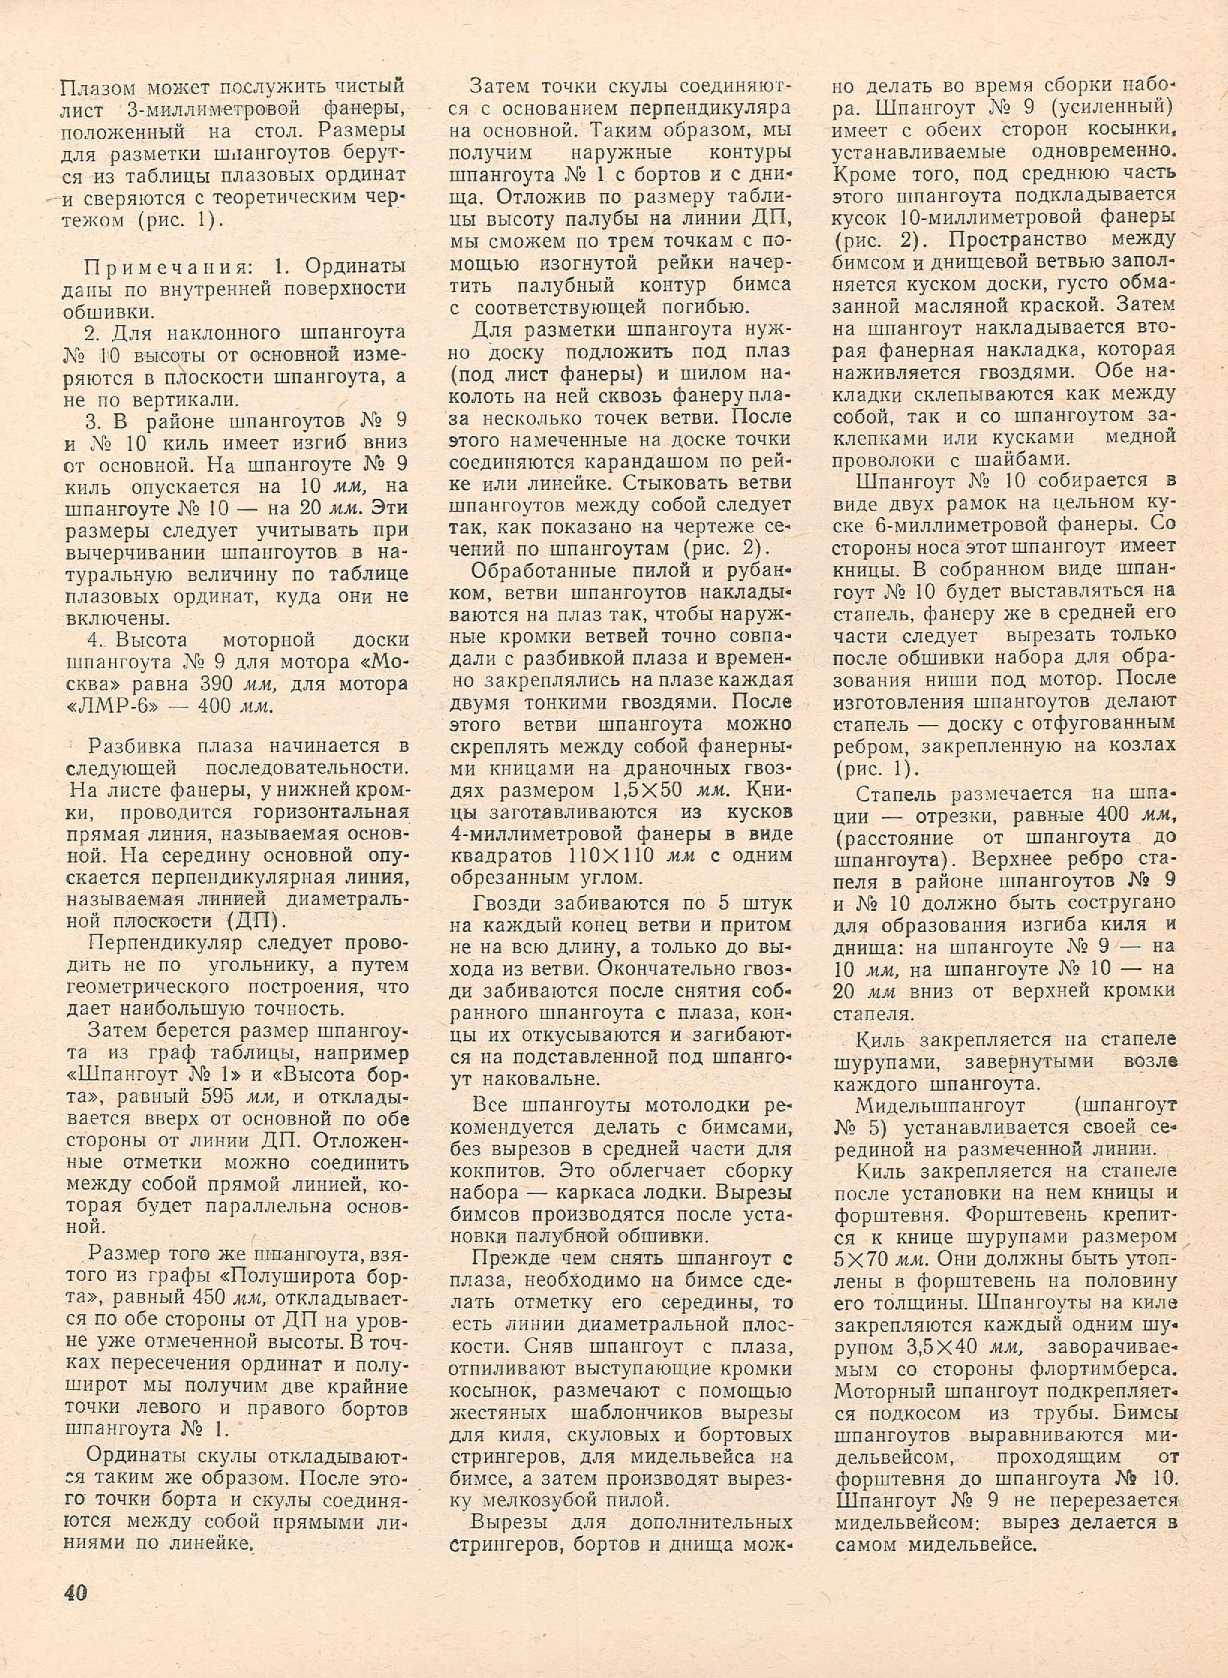 ЮМК 10, 1964, 40 c.